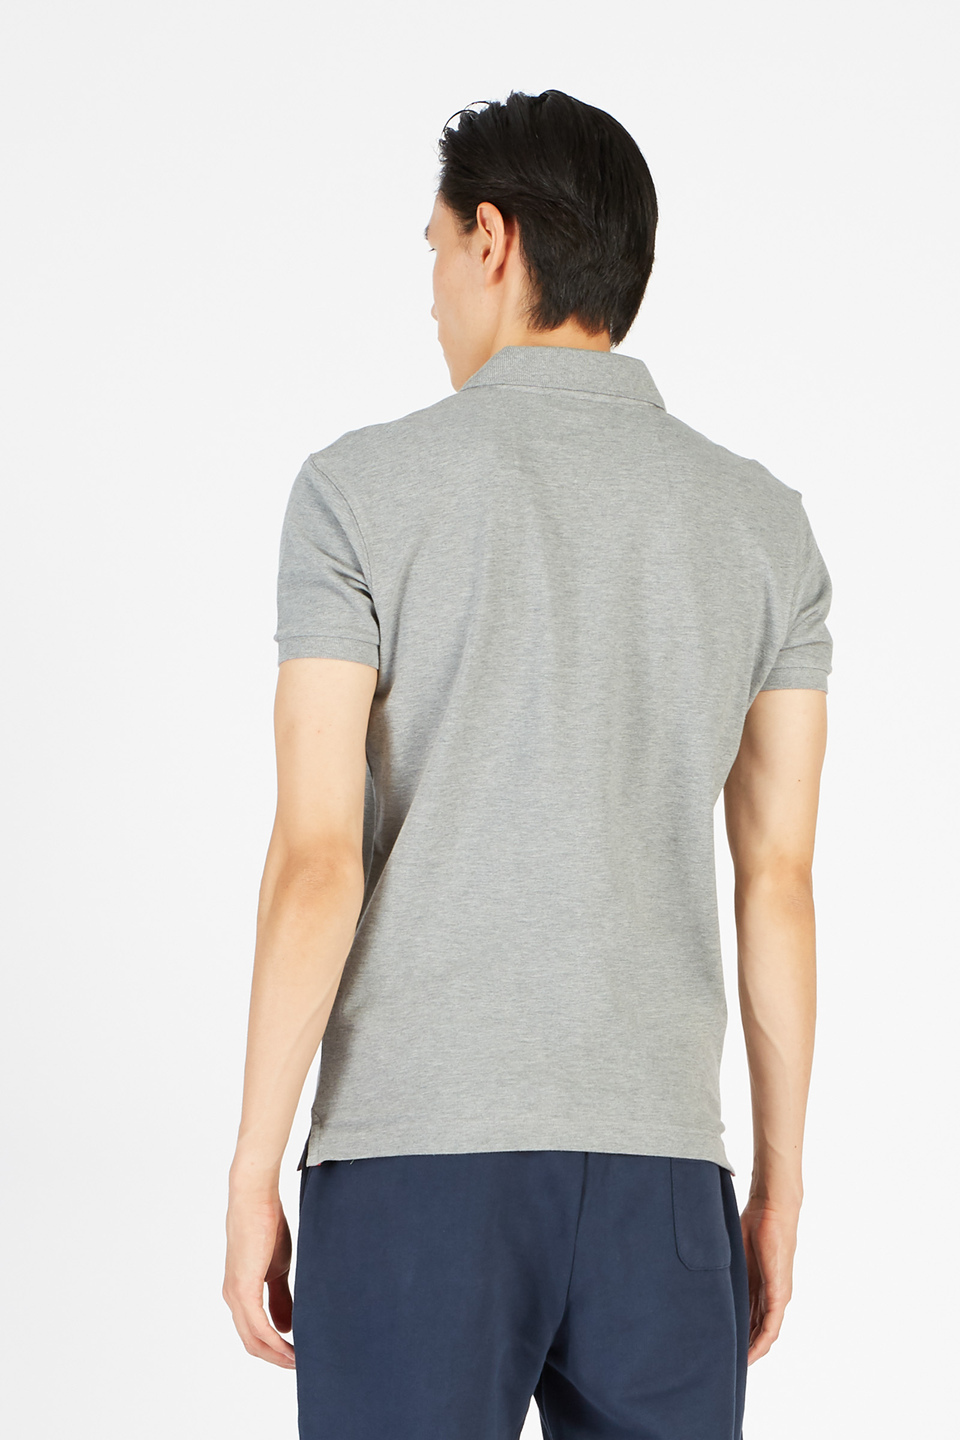 Herren-Poloshirt Slim Fit - Eduardo | La Martina - Official Online Shop